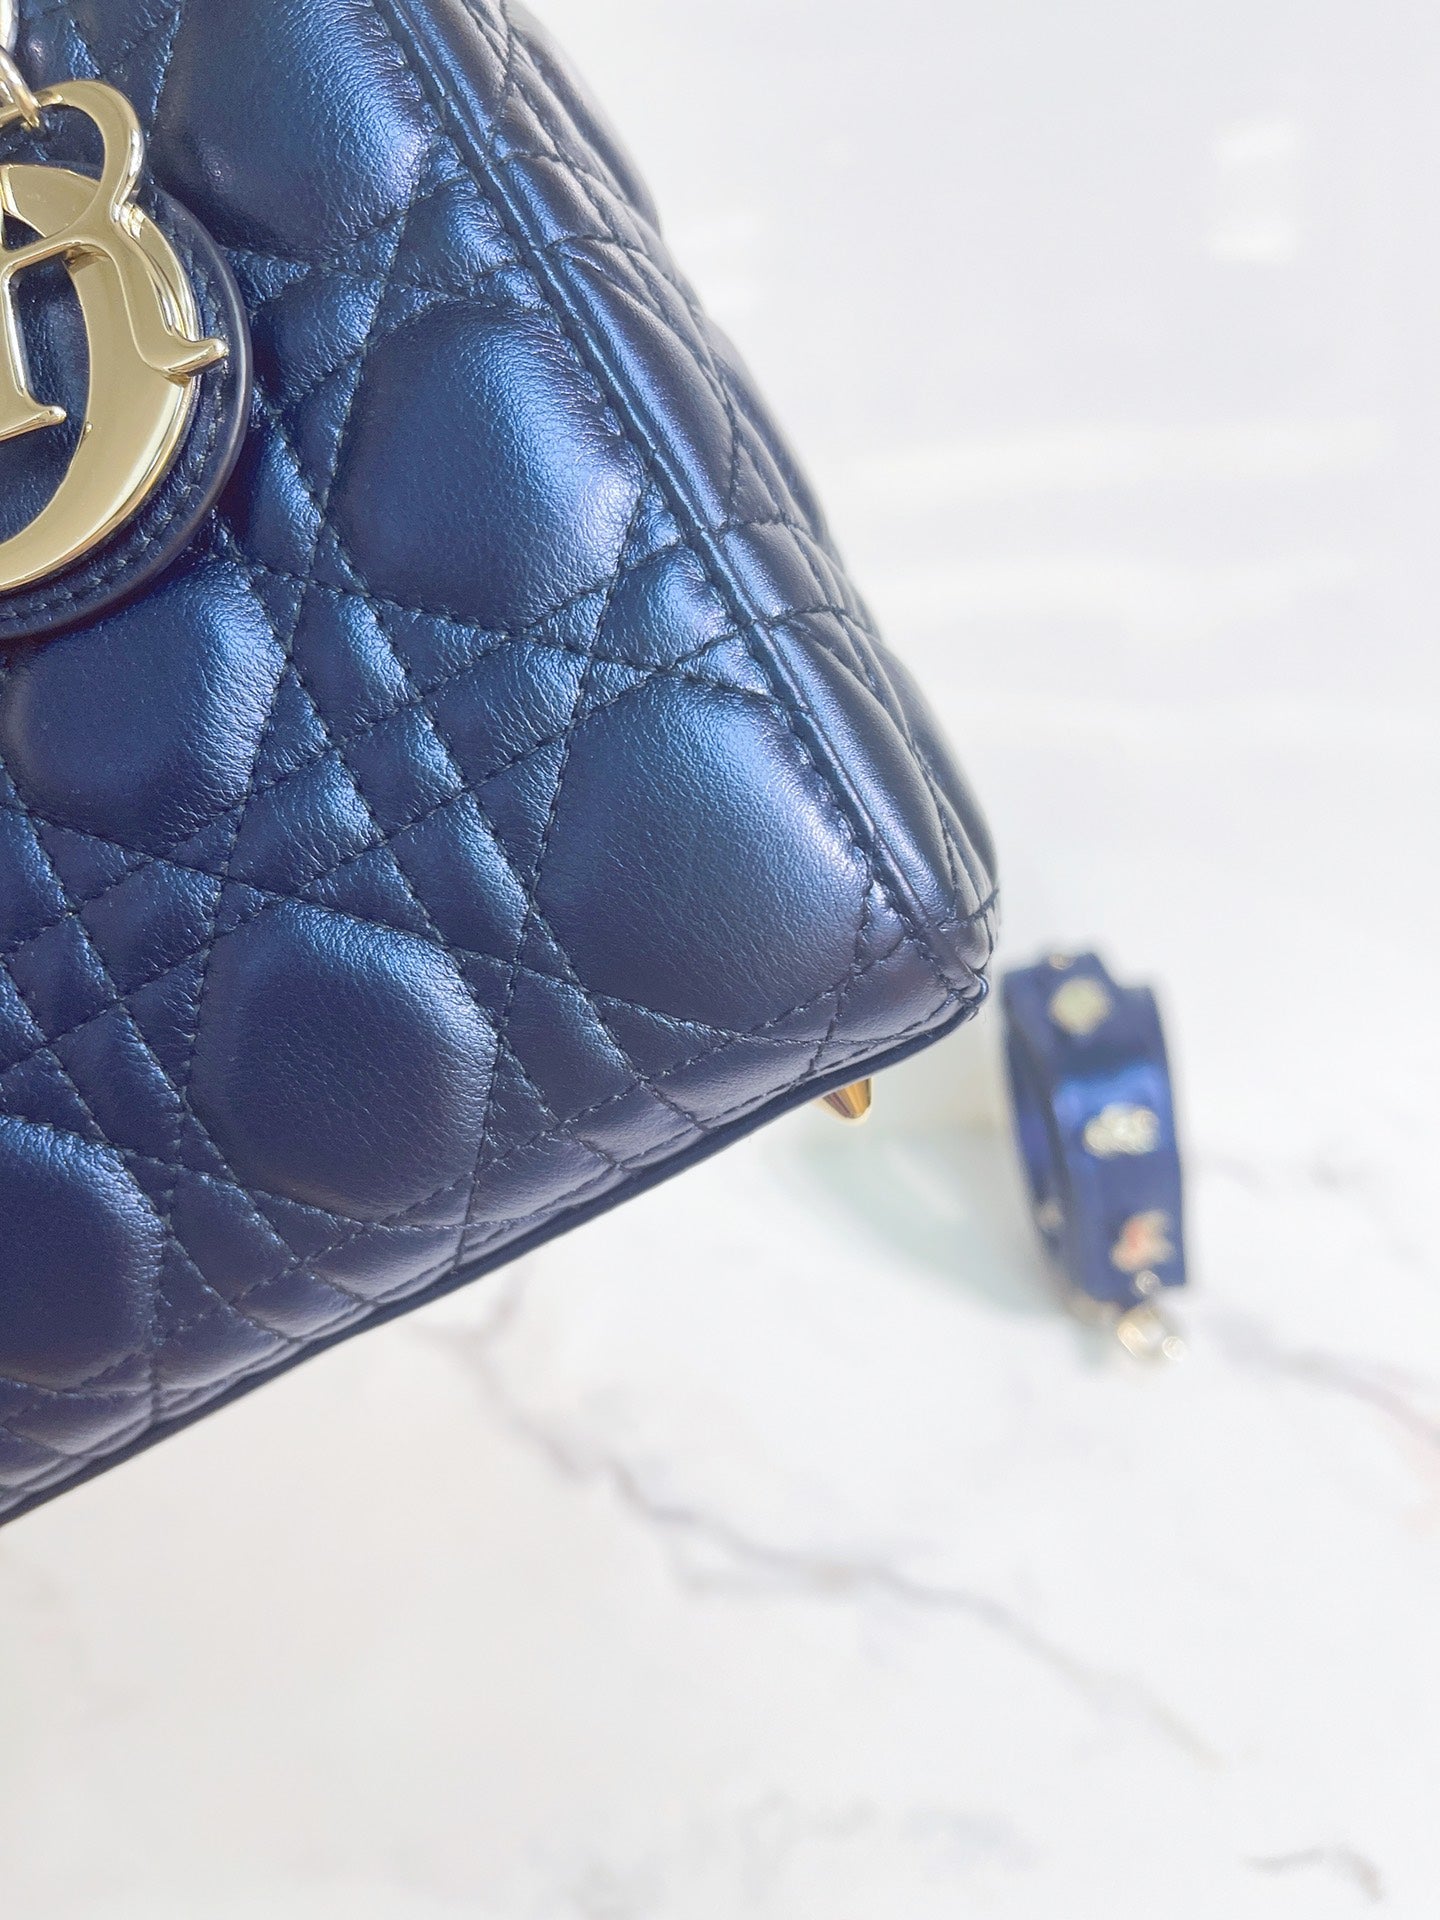 My Lady Dior Small Bag Blue Calfskin